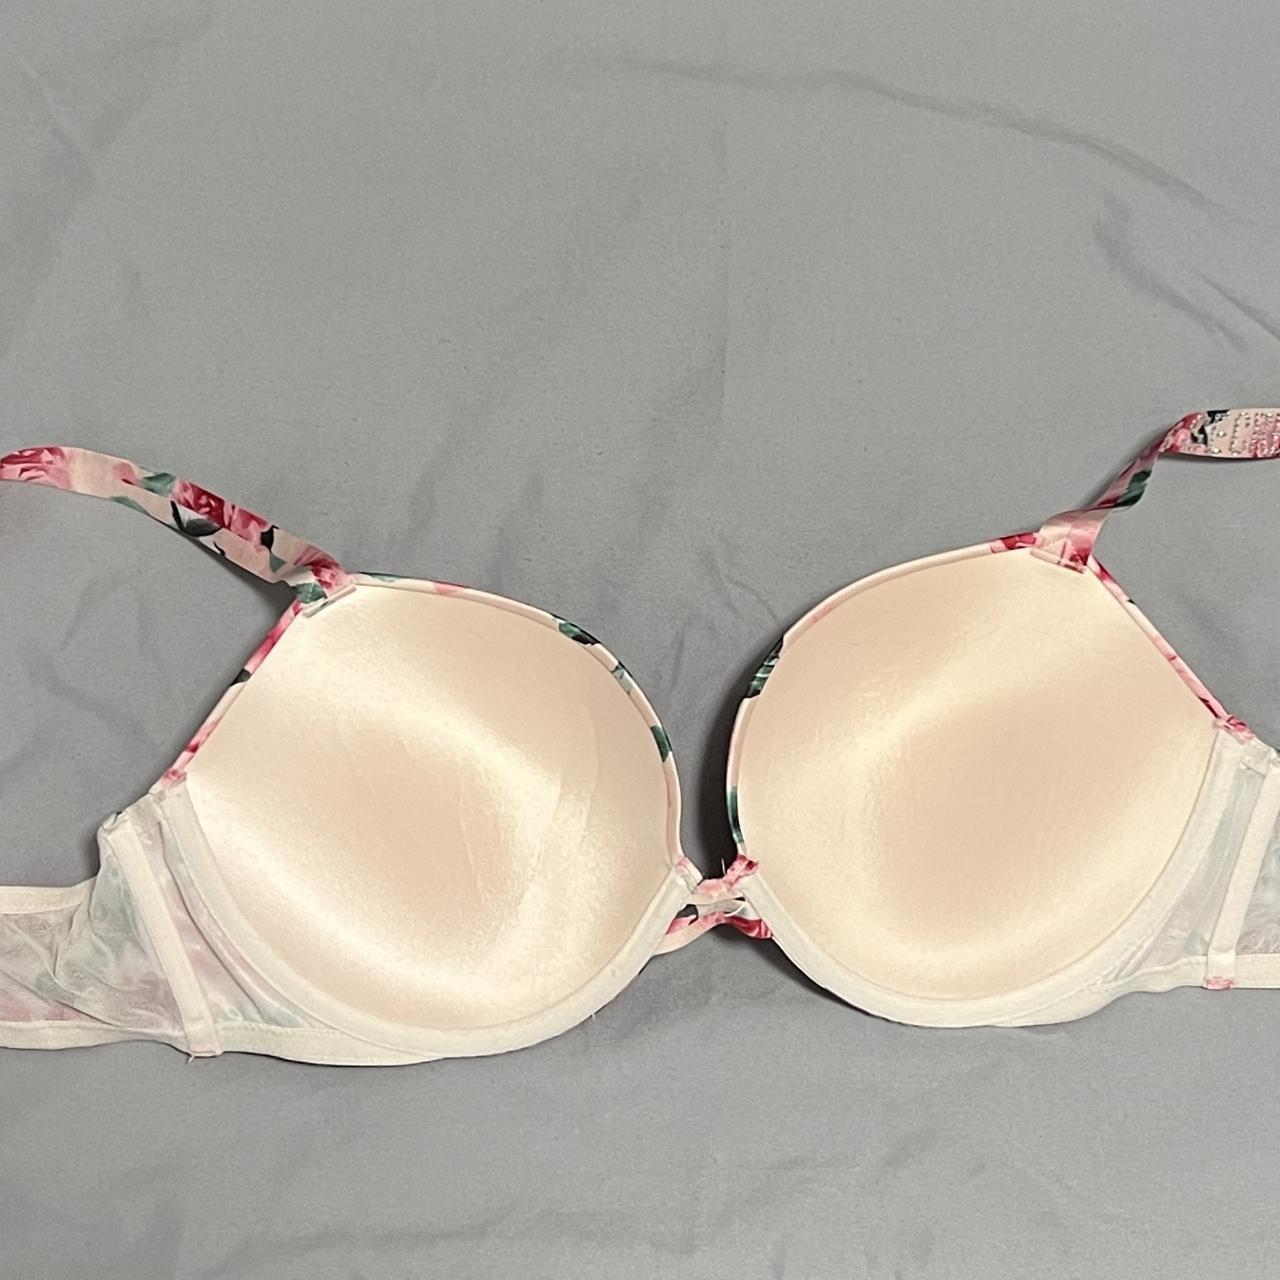 Victoria's Secret bra •38C •good condition •padded - Depop